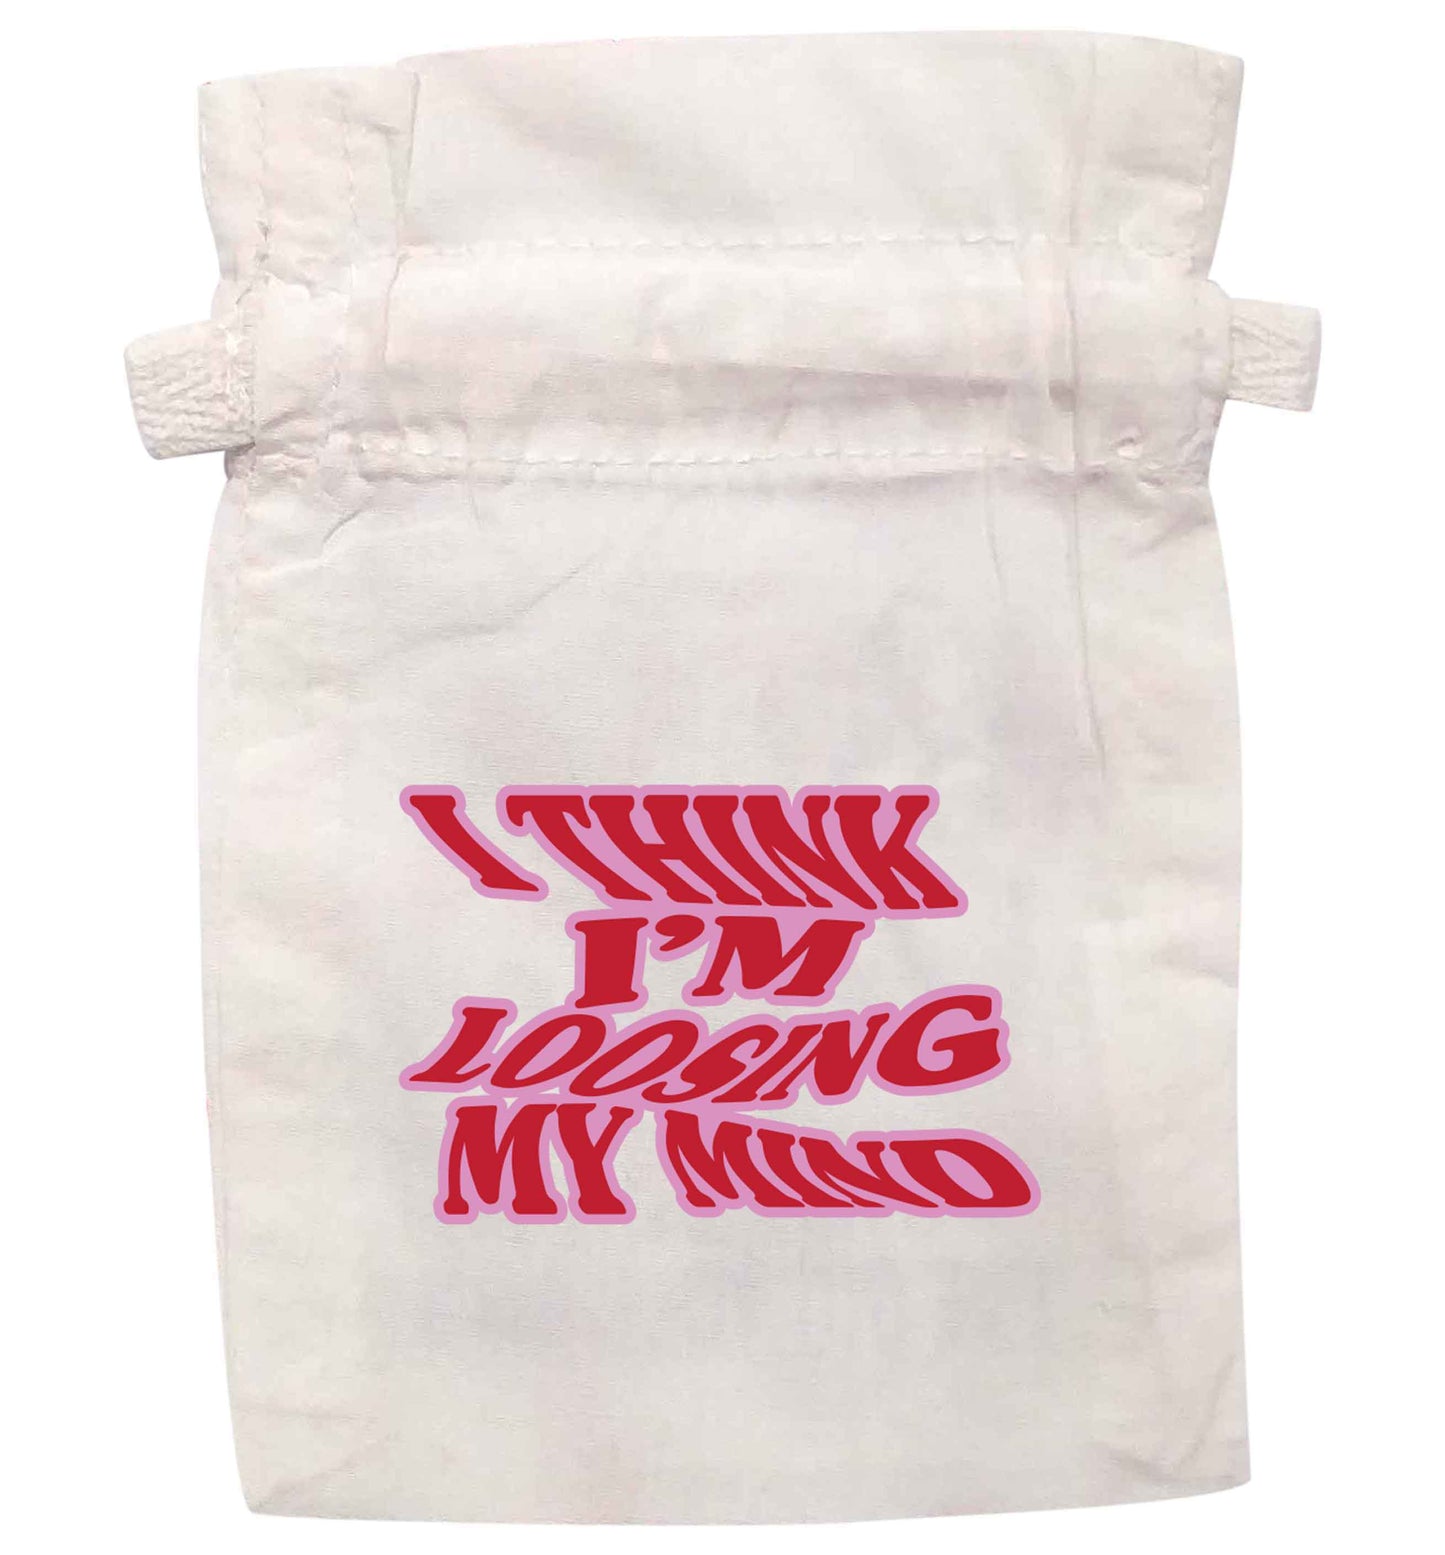 I think I'm loosing my mind | XS - L | Pouch / Drawstring bag / Sack | Organic Cotton | Bulk discounts available!